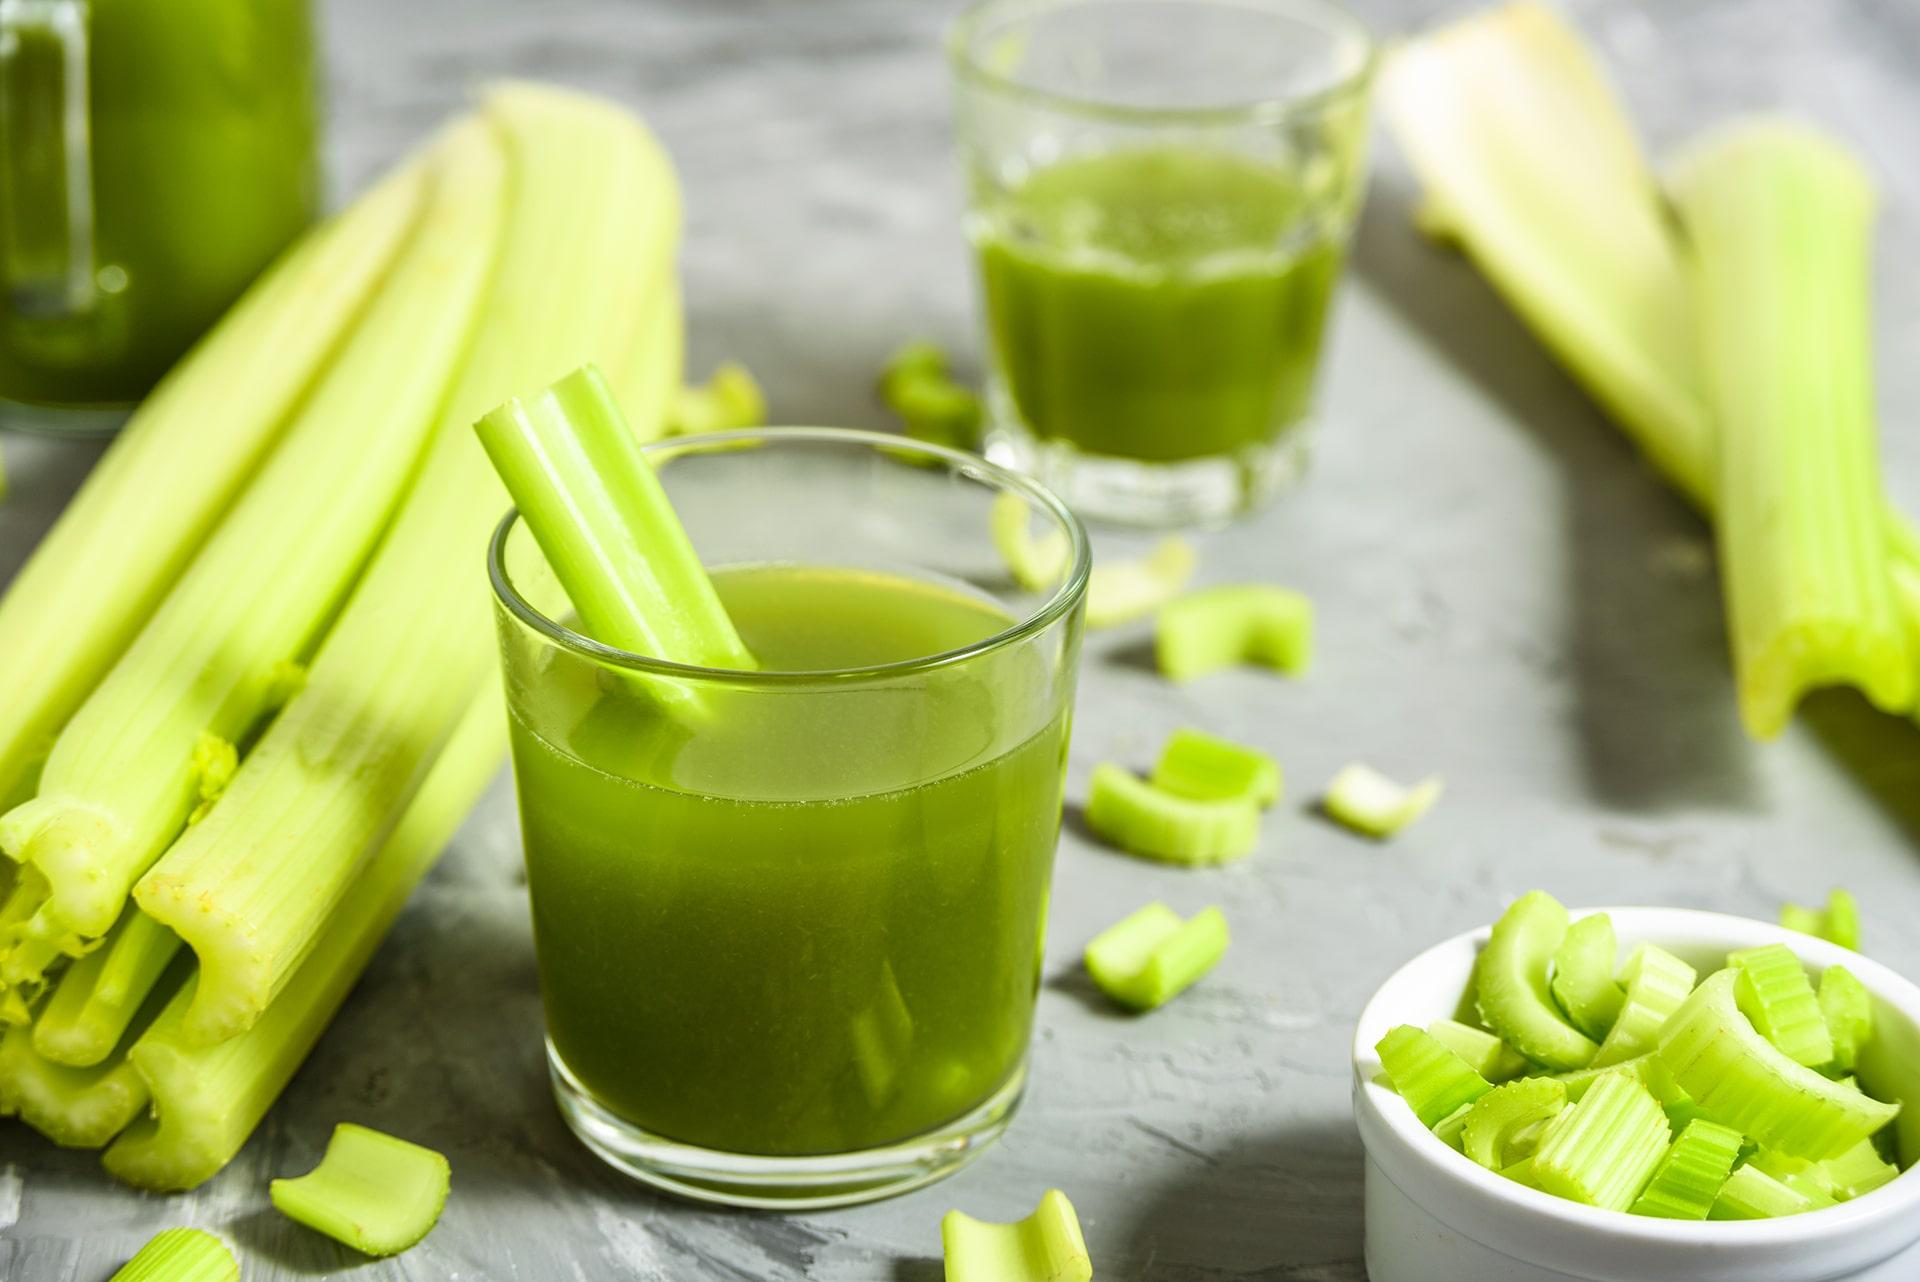 Celery Juice: Health Benefits, Alternatives, How to Make